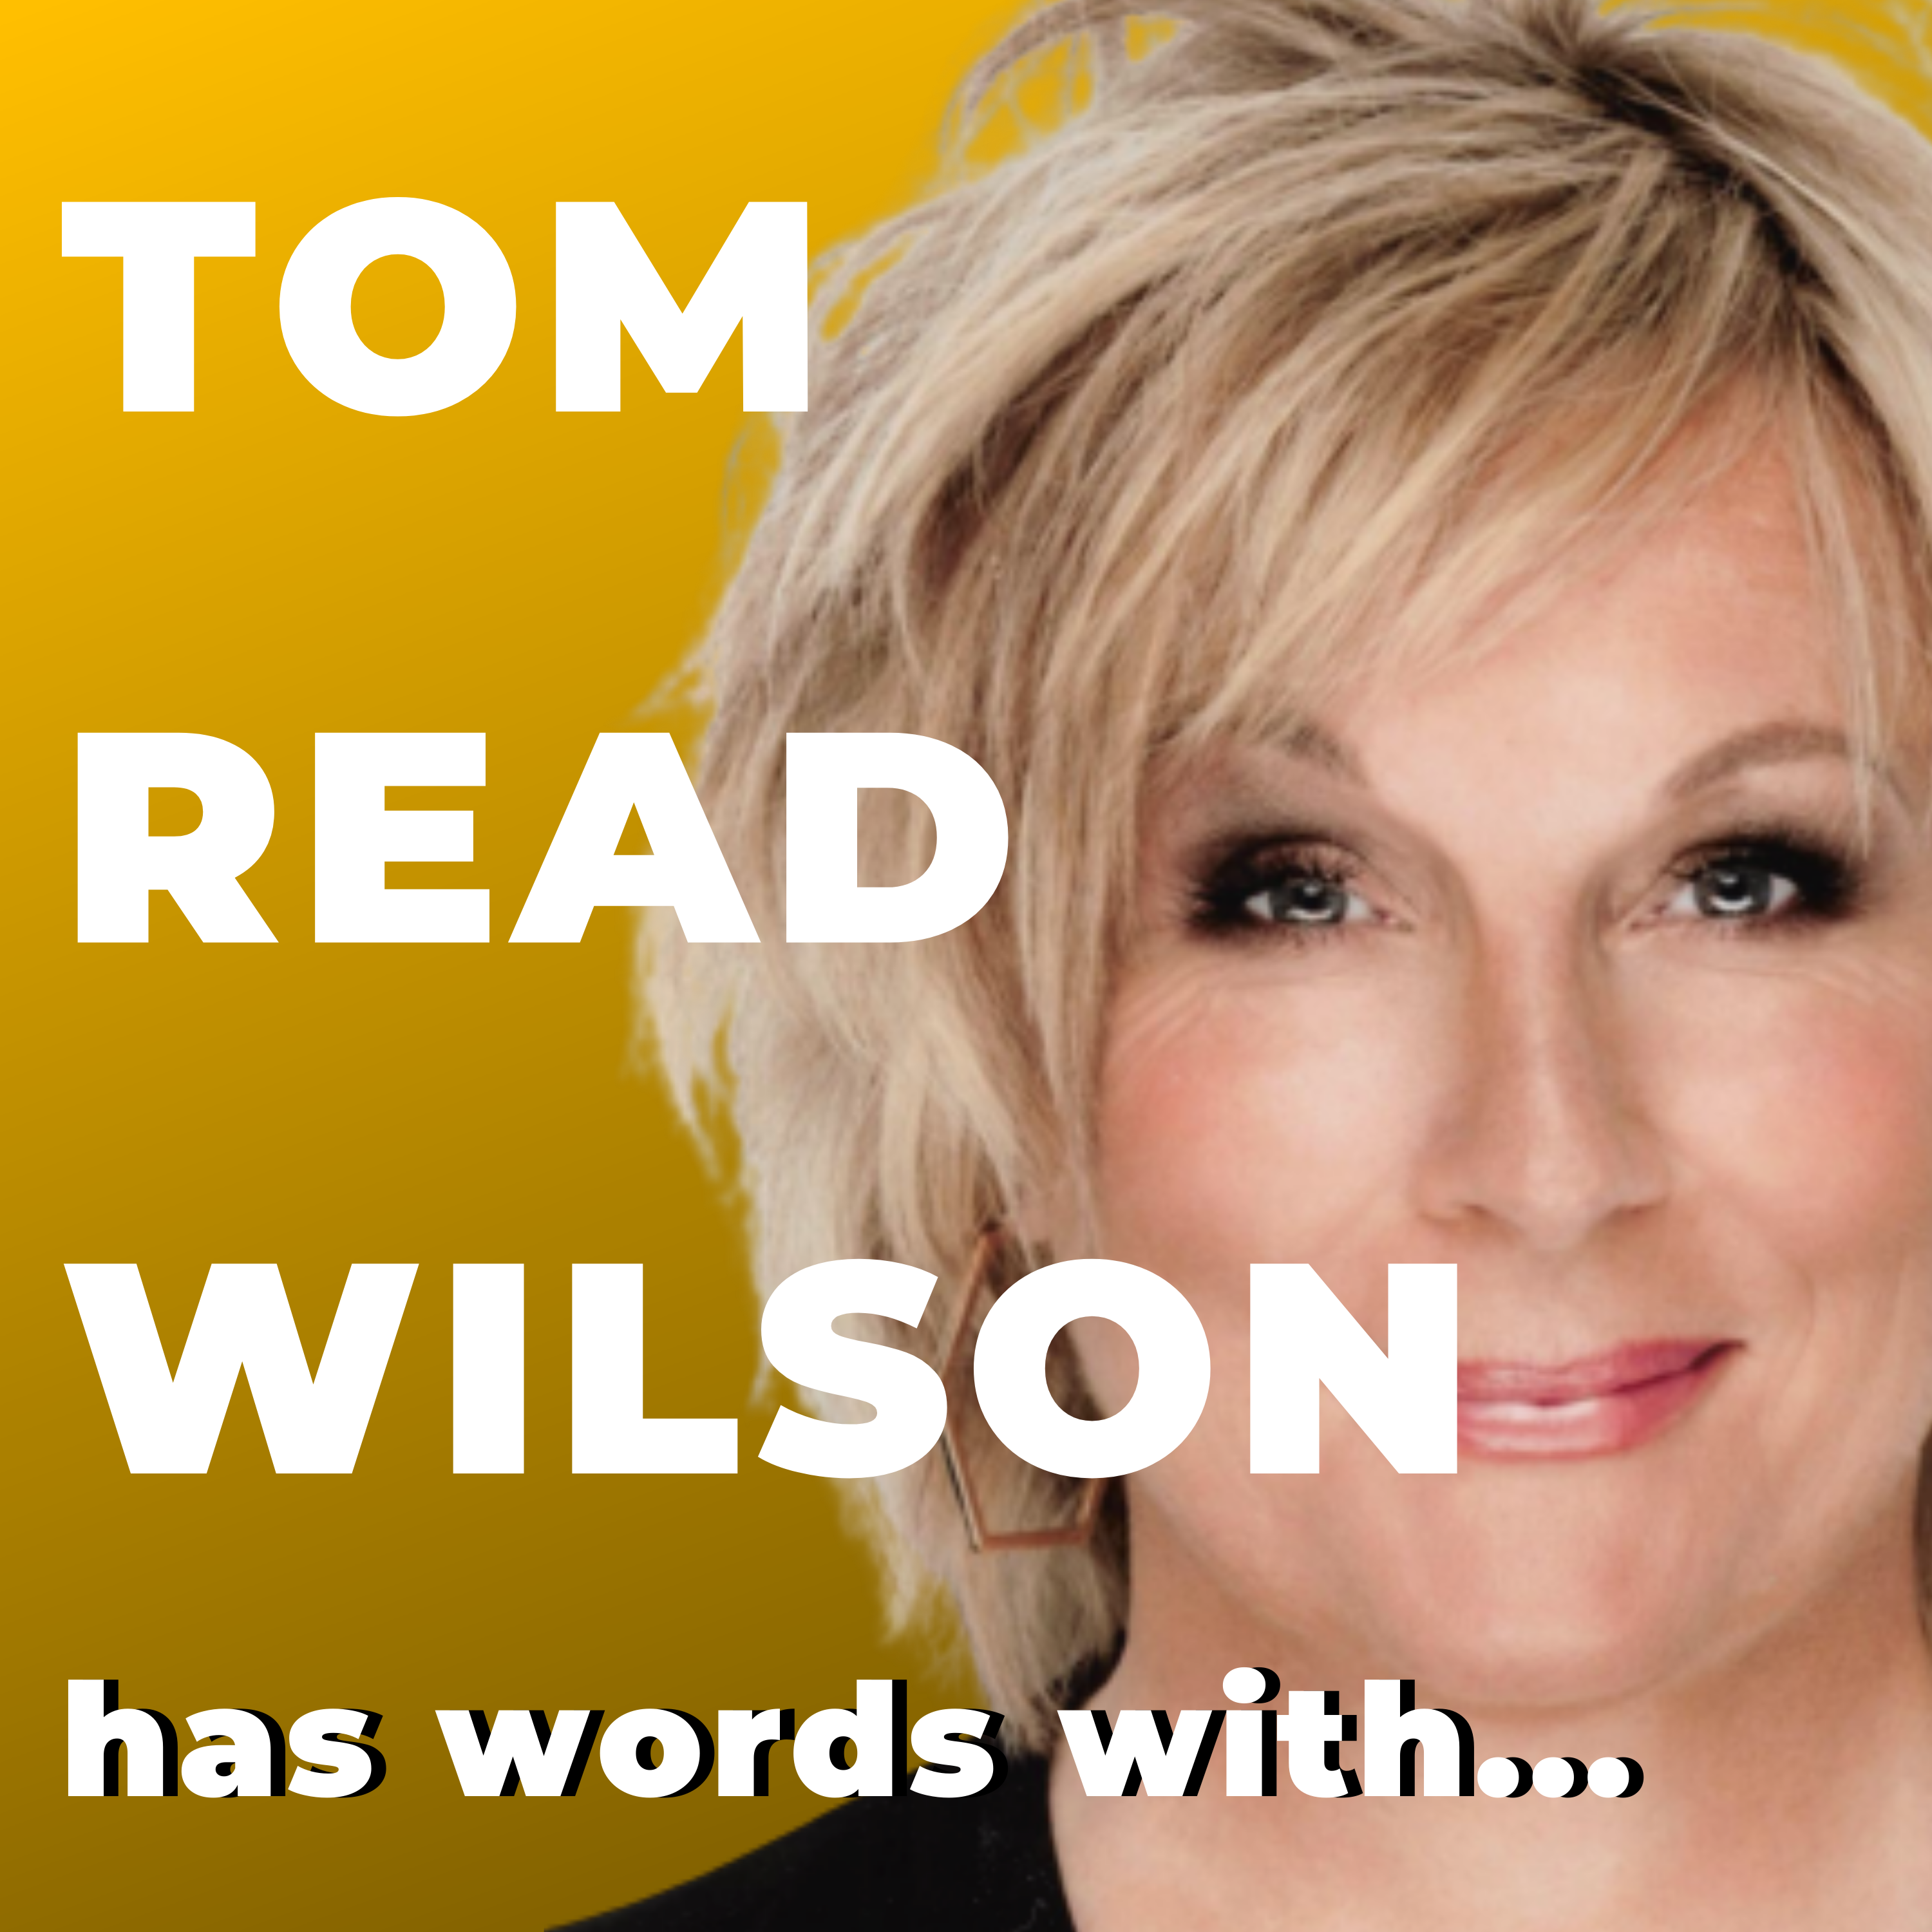 Tom Read Wilson has words with Jennifer Saunders